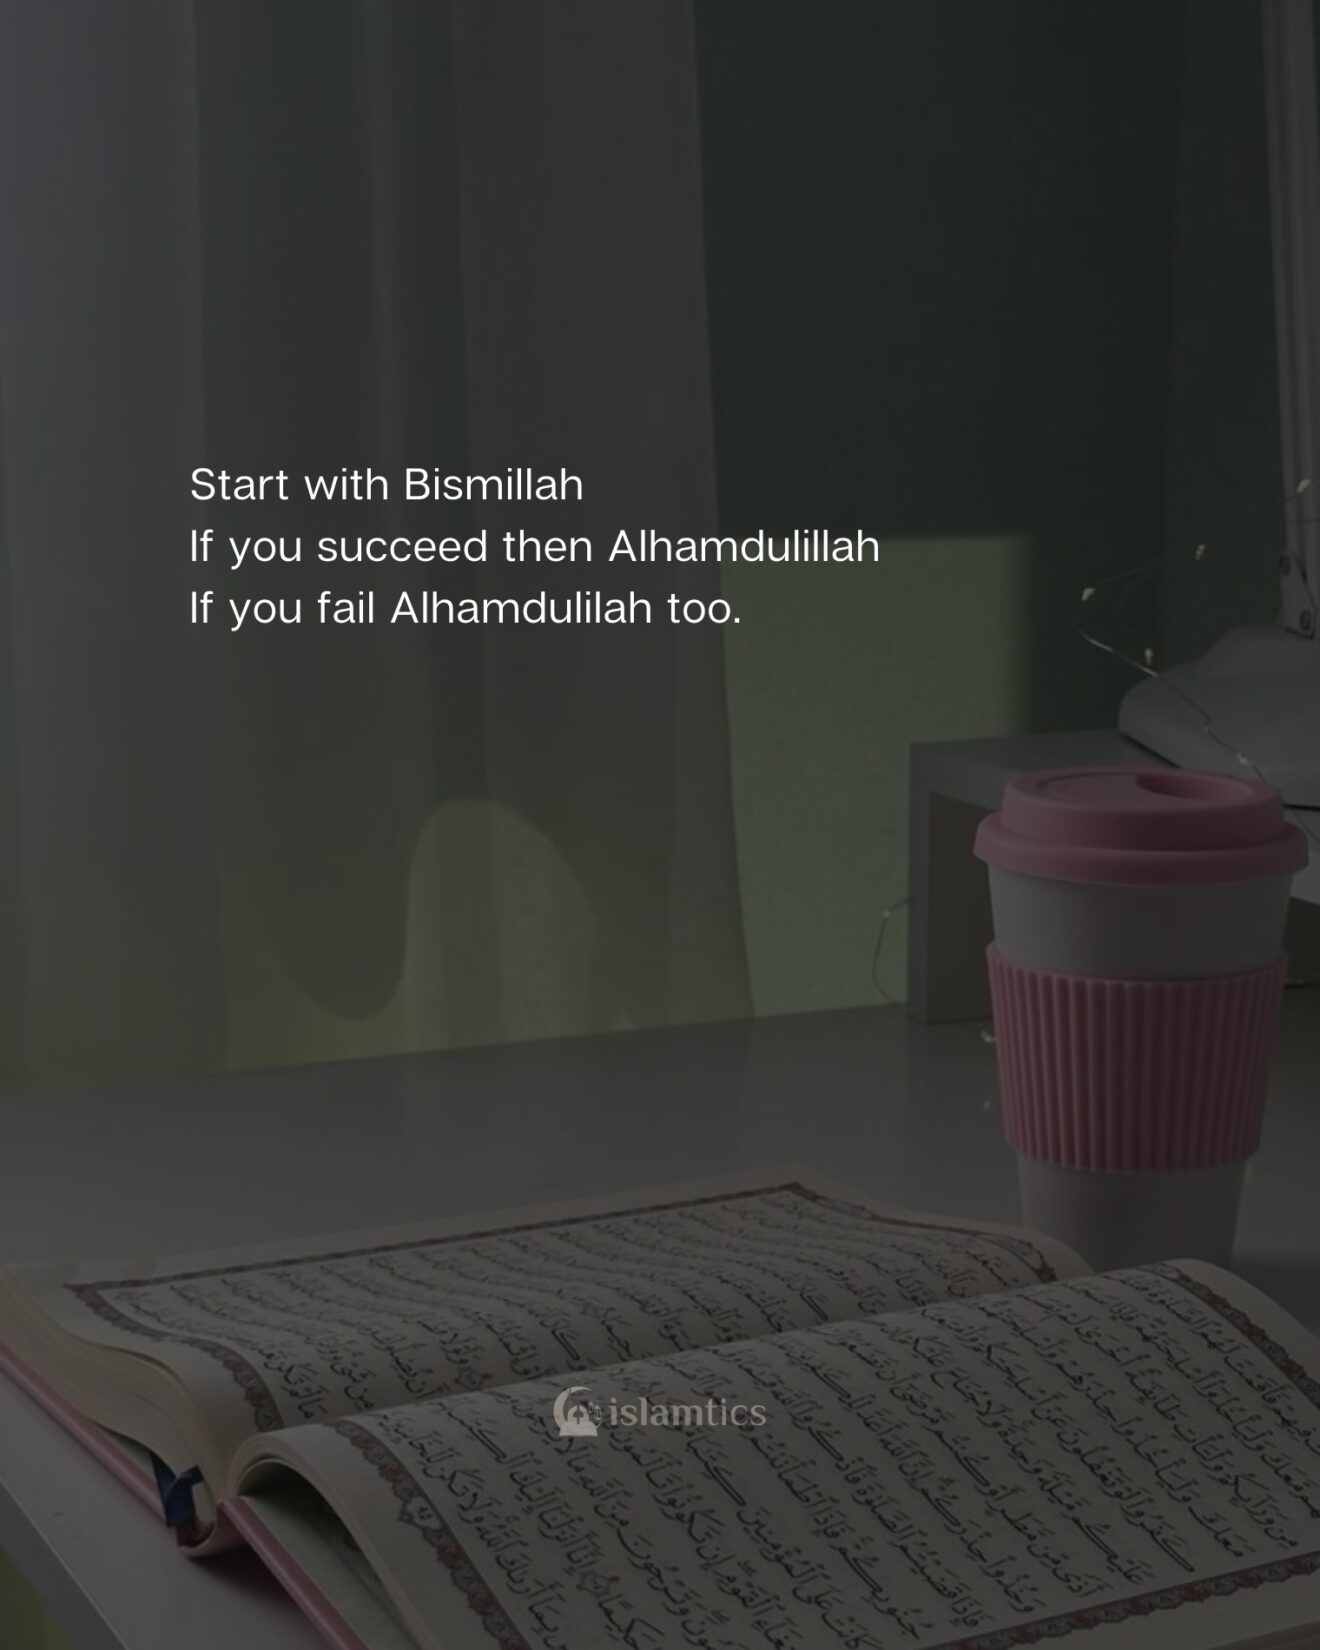  Start with Bismillah if you succeed then Alhamdulillah